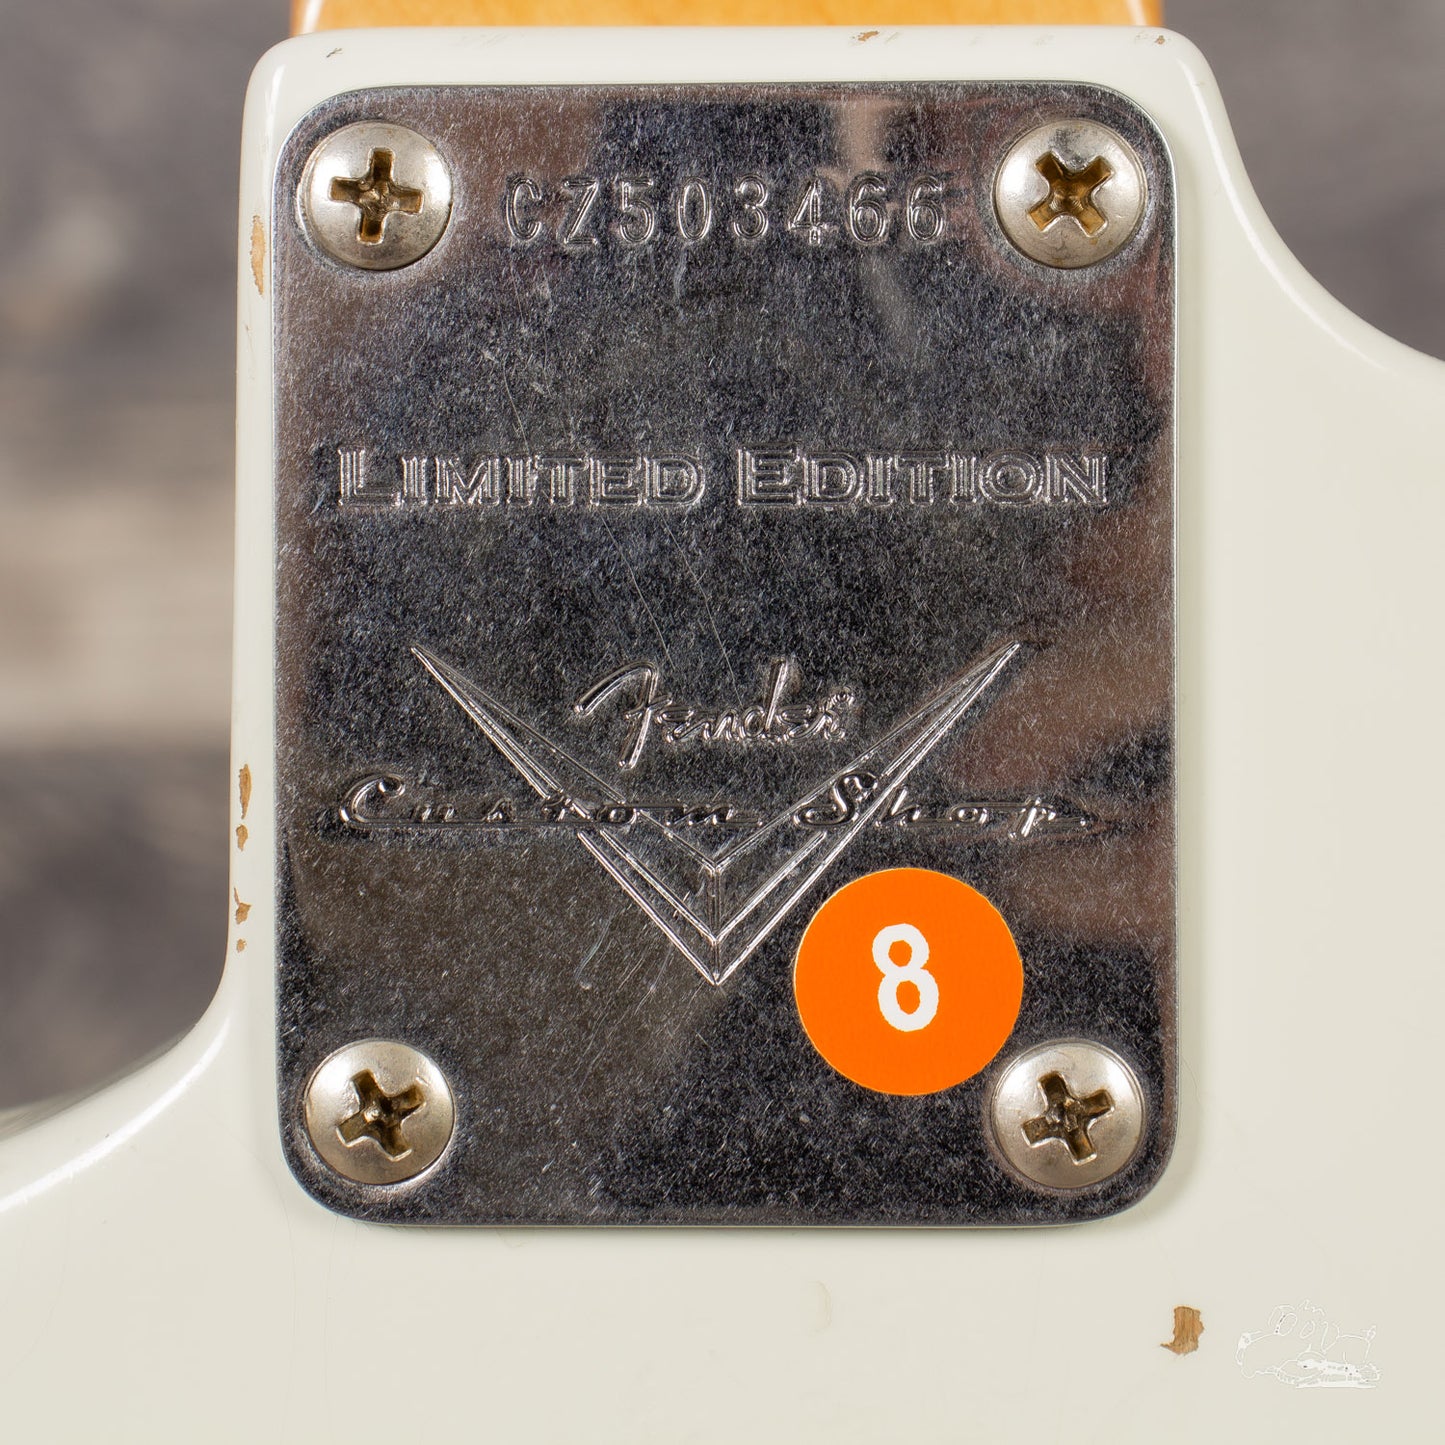 2005 NAMM Set - '59 Strat Relic In Olympic White & Relic'd Fender Pro Junior Relic Set